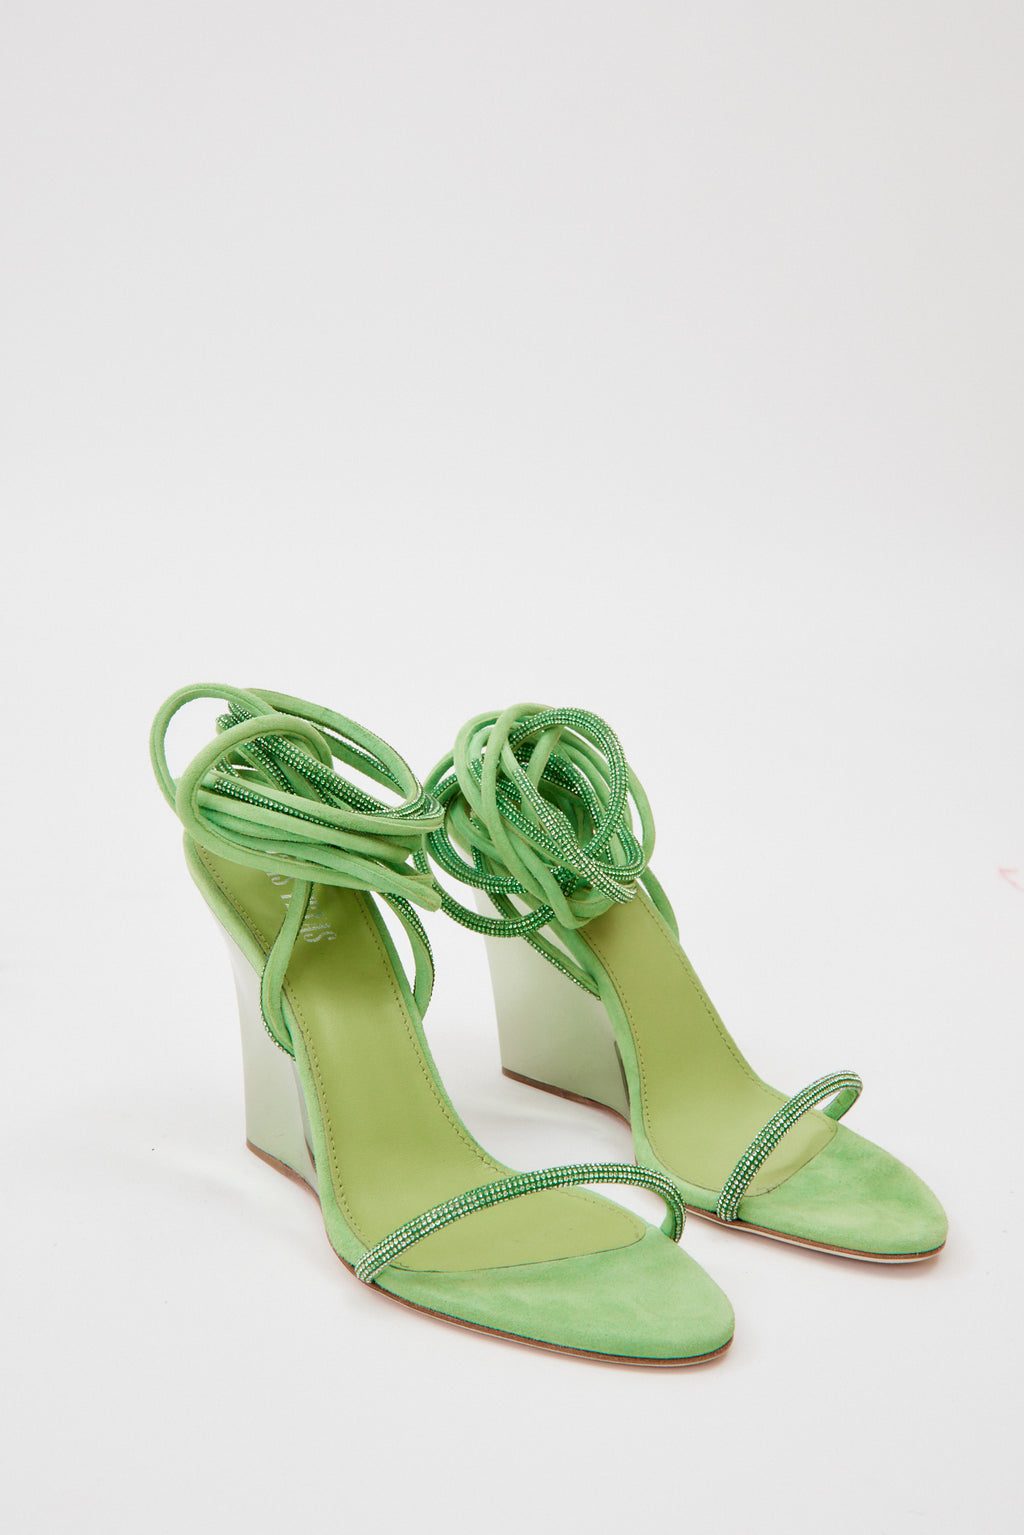 Willow Peridot Wedge Sandals